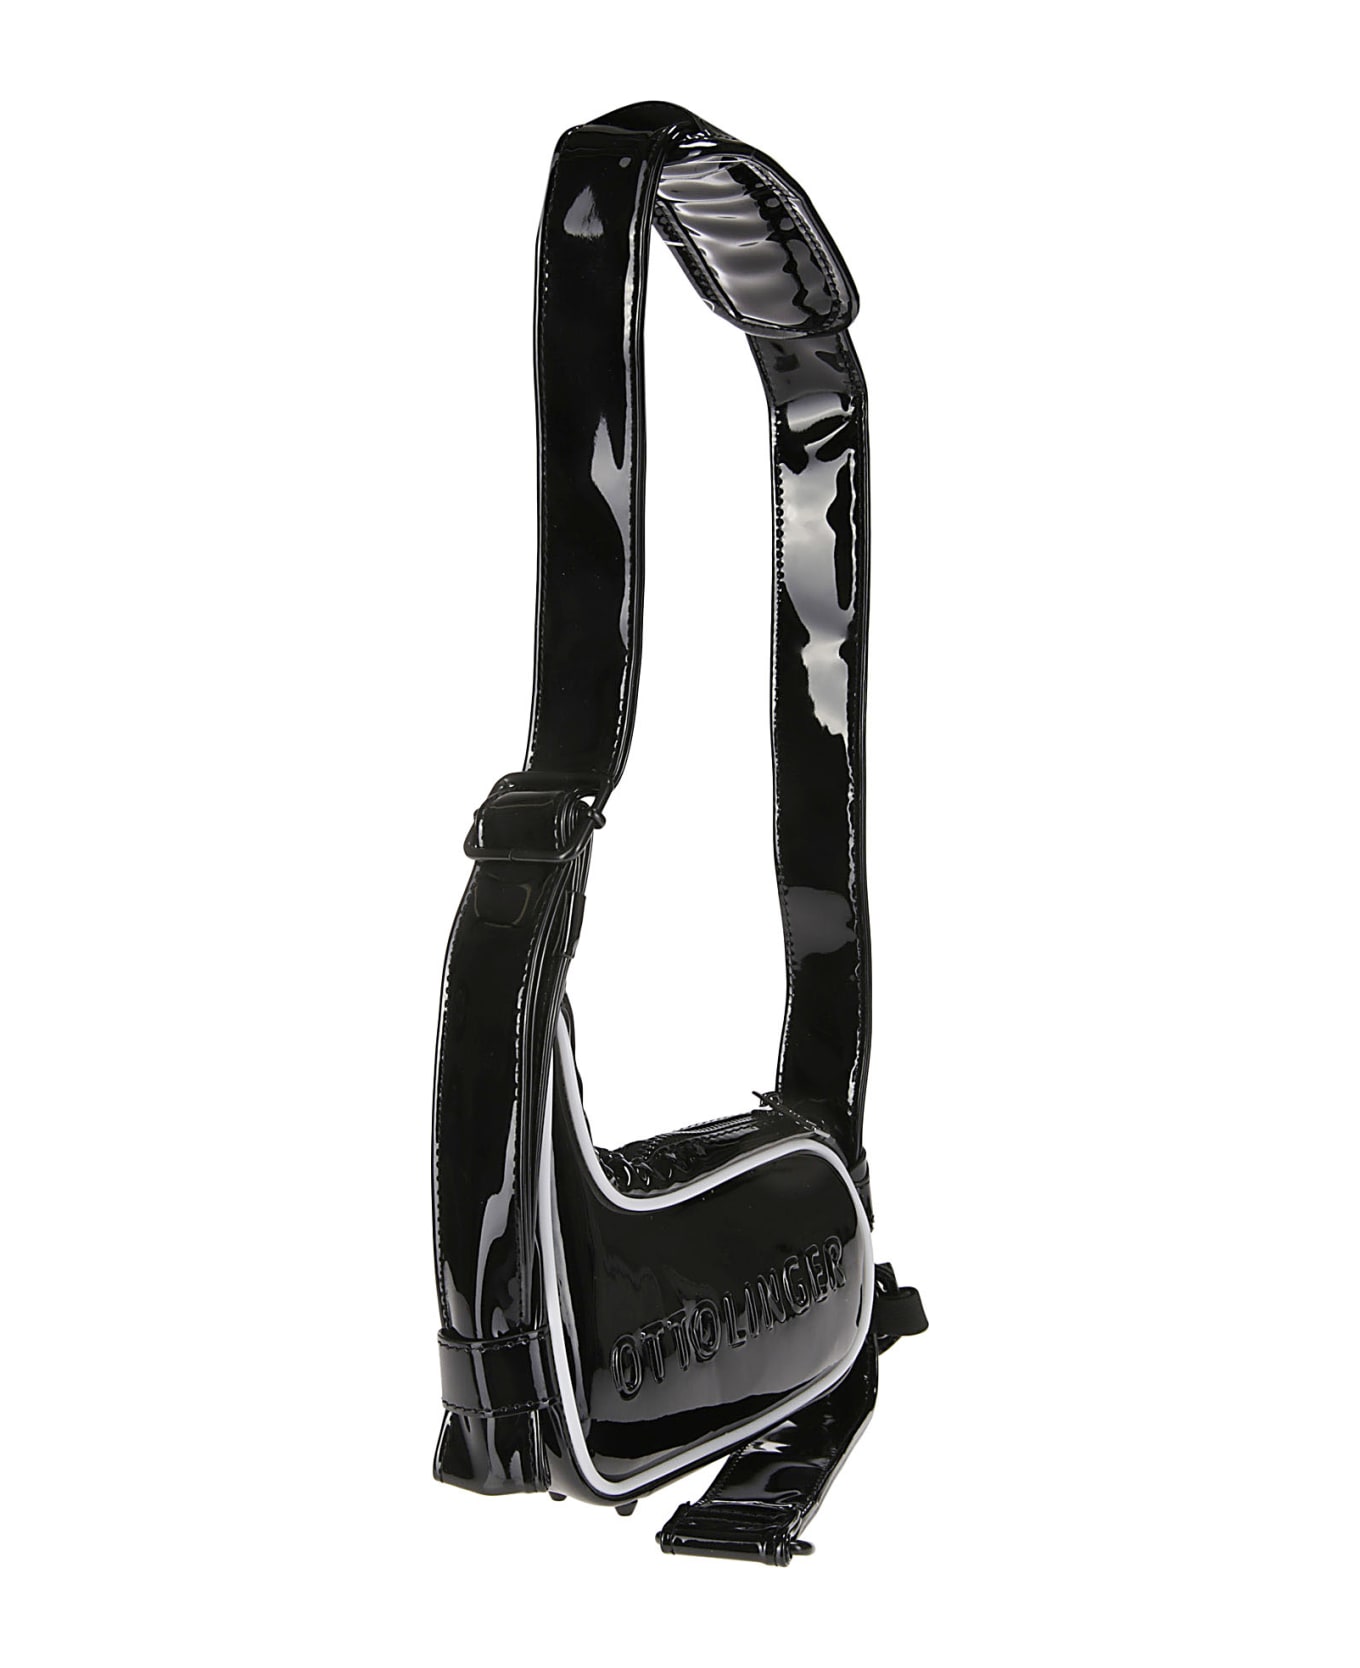 Puma X Ottolinger Small Bag - PUMA BLACK